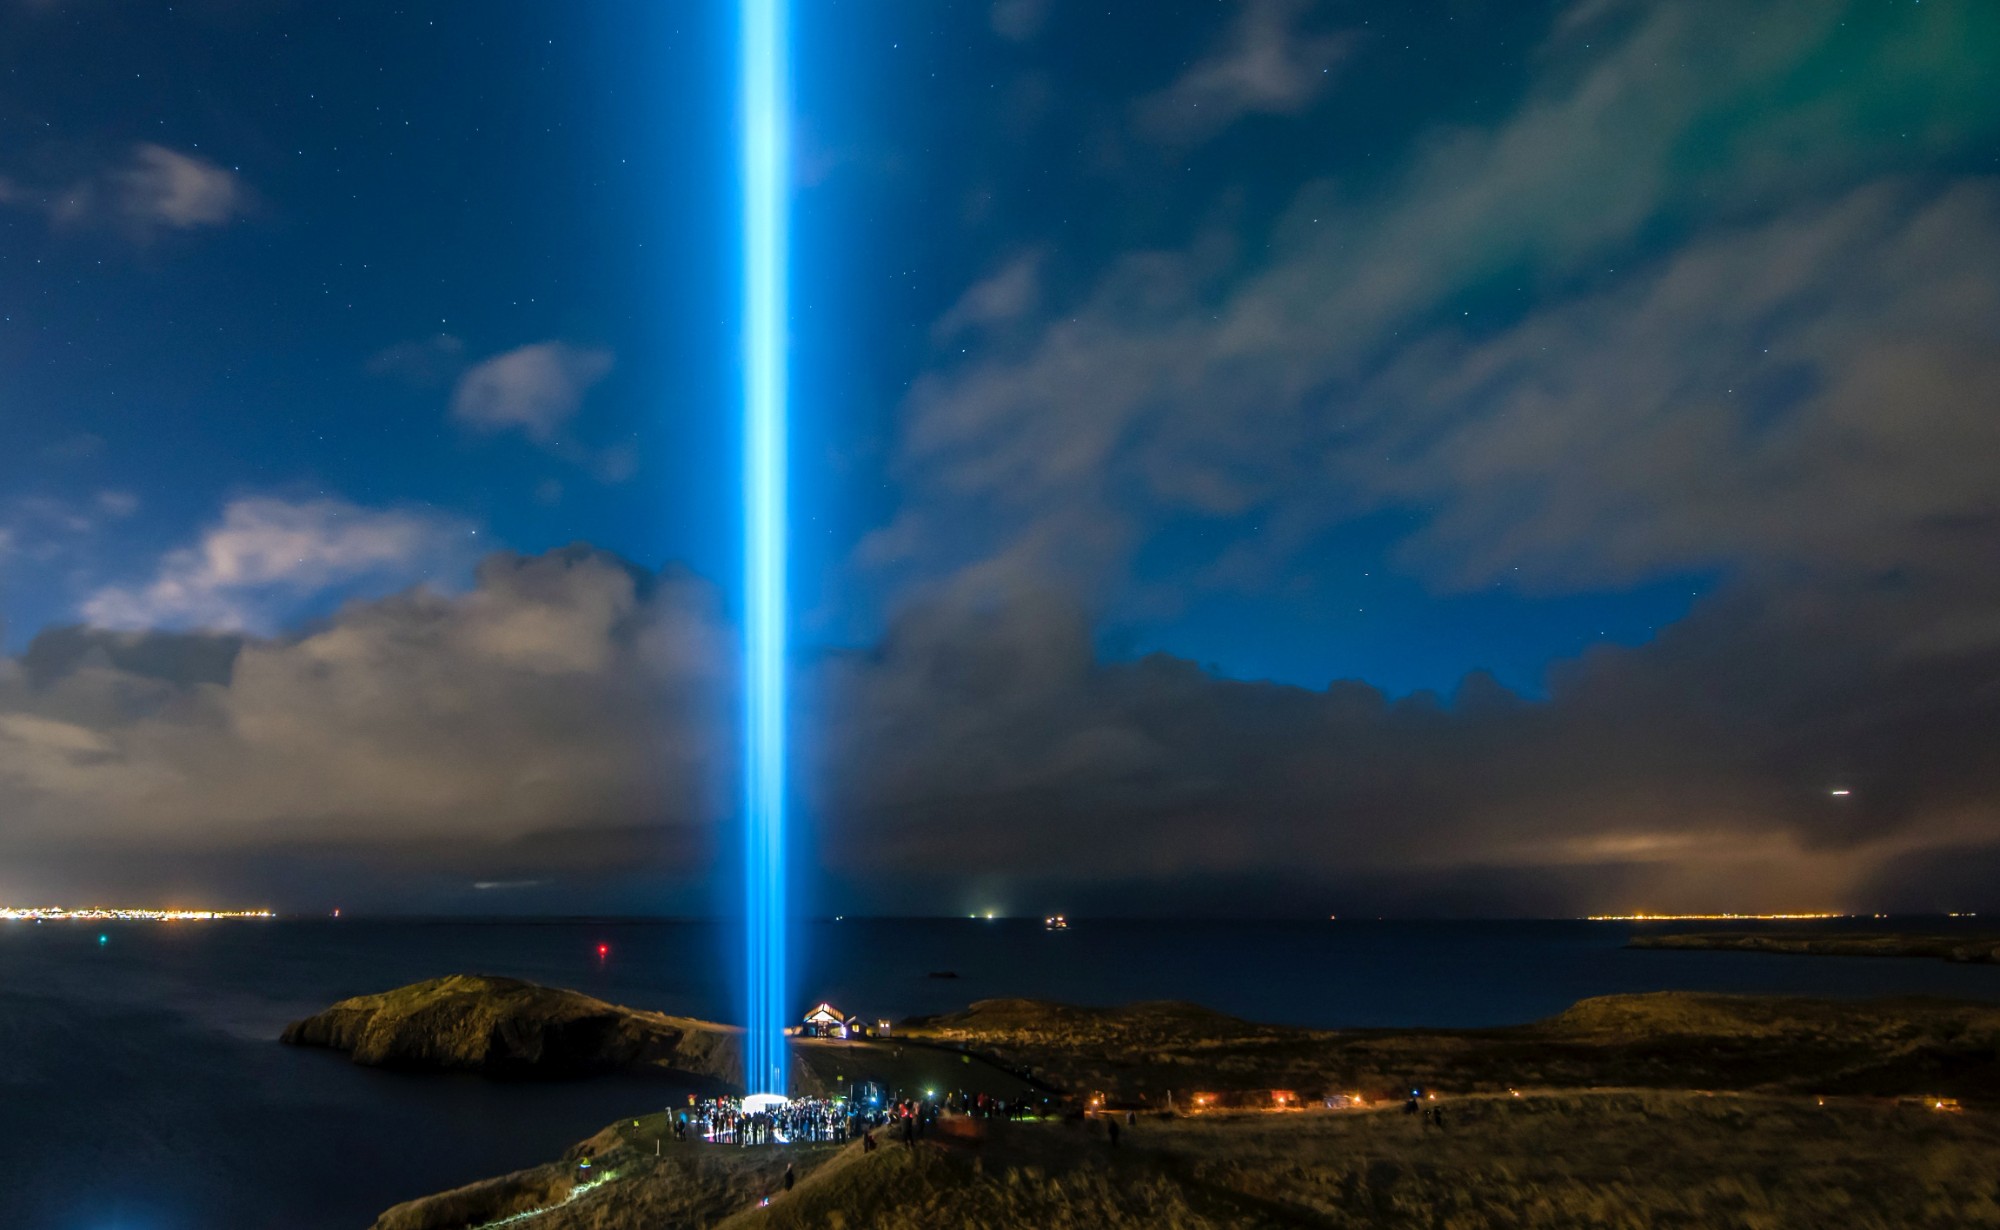 Imagine Peace Tower by Yoko Ono